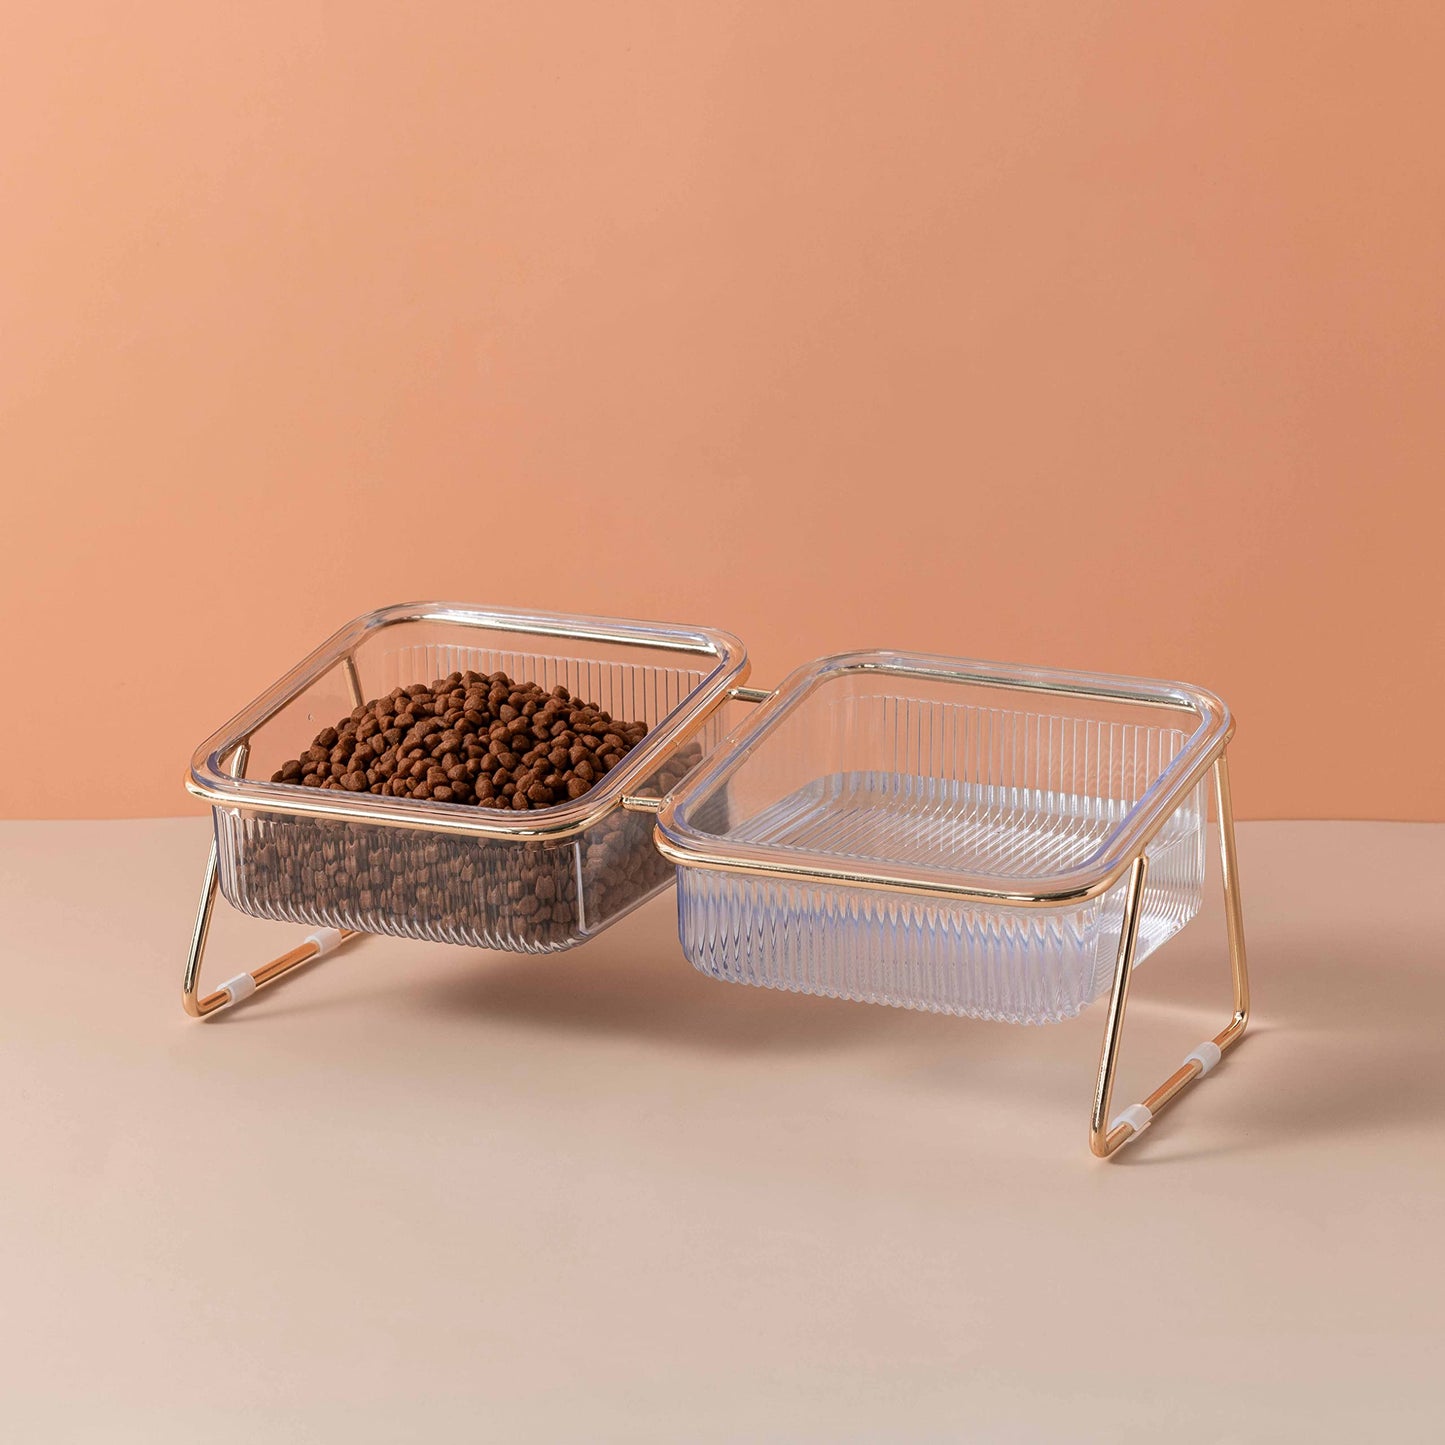 Pet Dog Cat Puppy Food Water Bowls Feeding Dishes 2 Large Bowl Dishwasher Safe